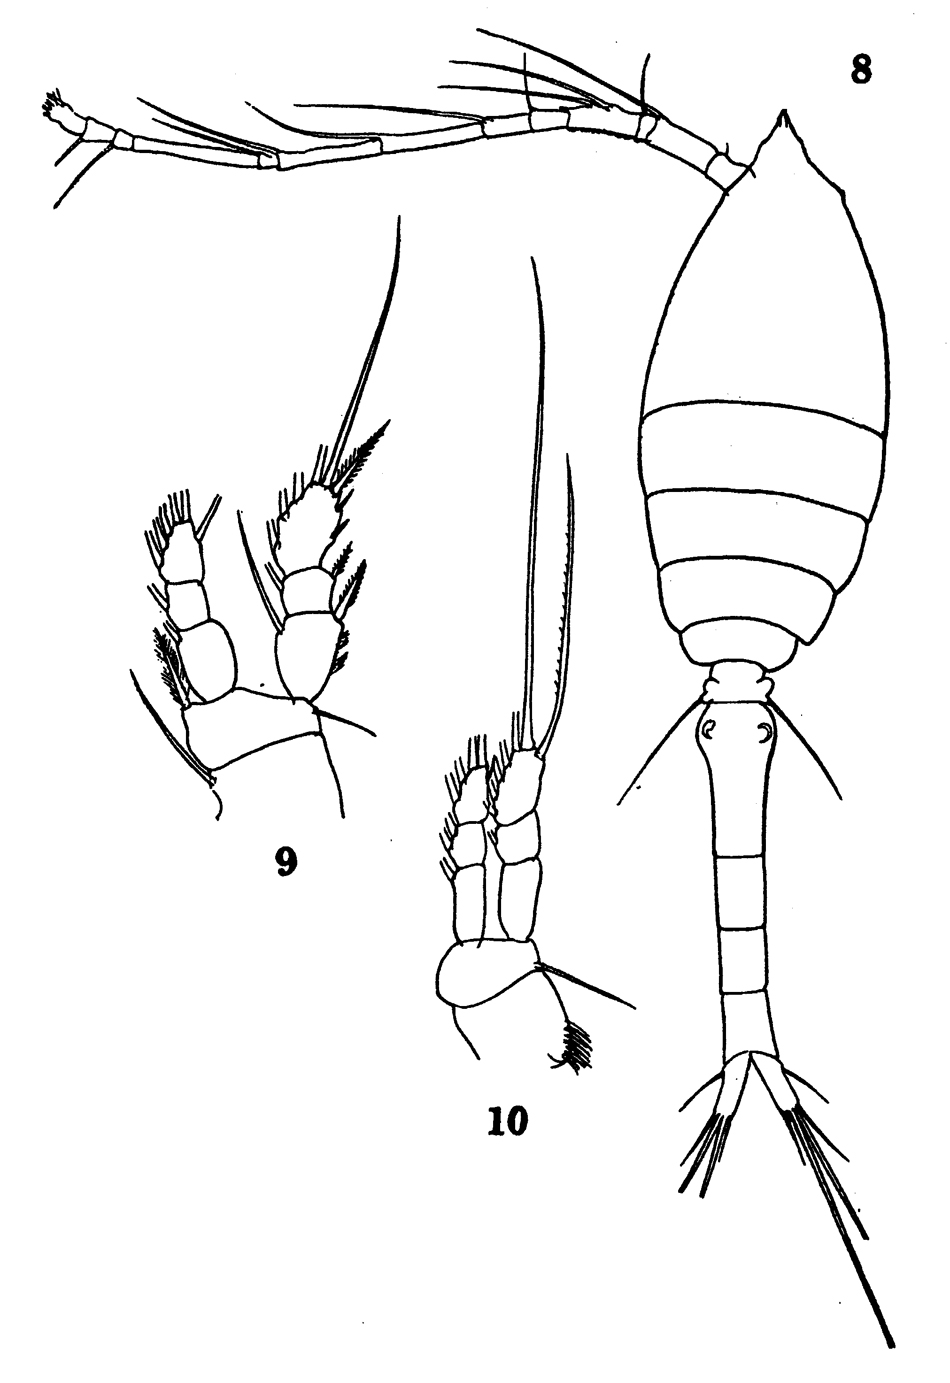 Species Oithona frigida - Plate 7 of morphological figures